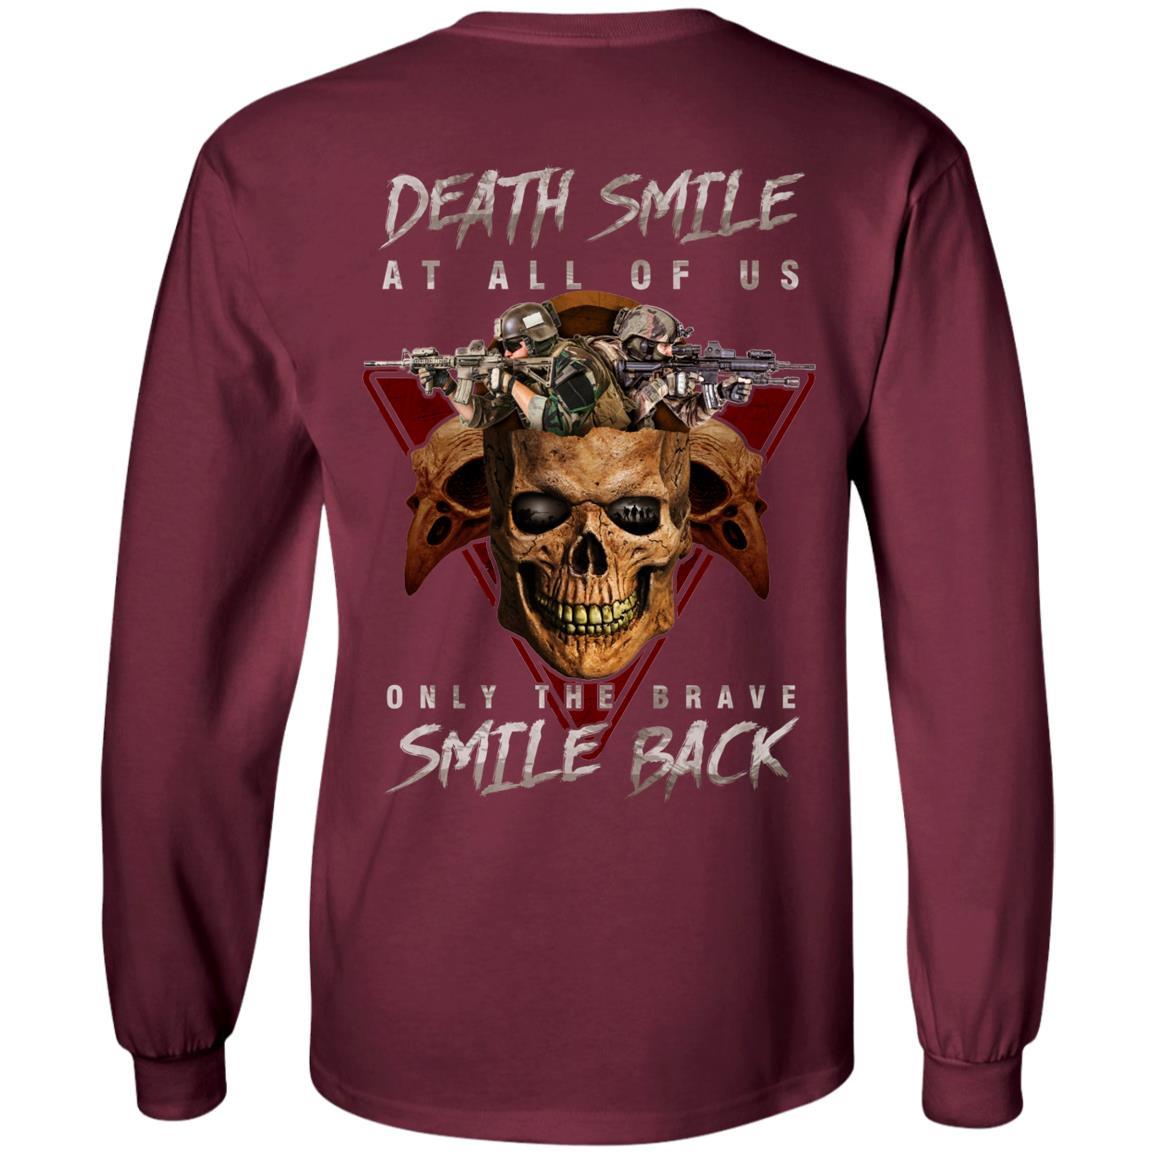 Military T-Shirt "Death Smile At All Of Us Only The Brave Smile Back" Men Back s-TShirt-General-Veterans Nation